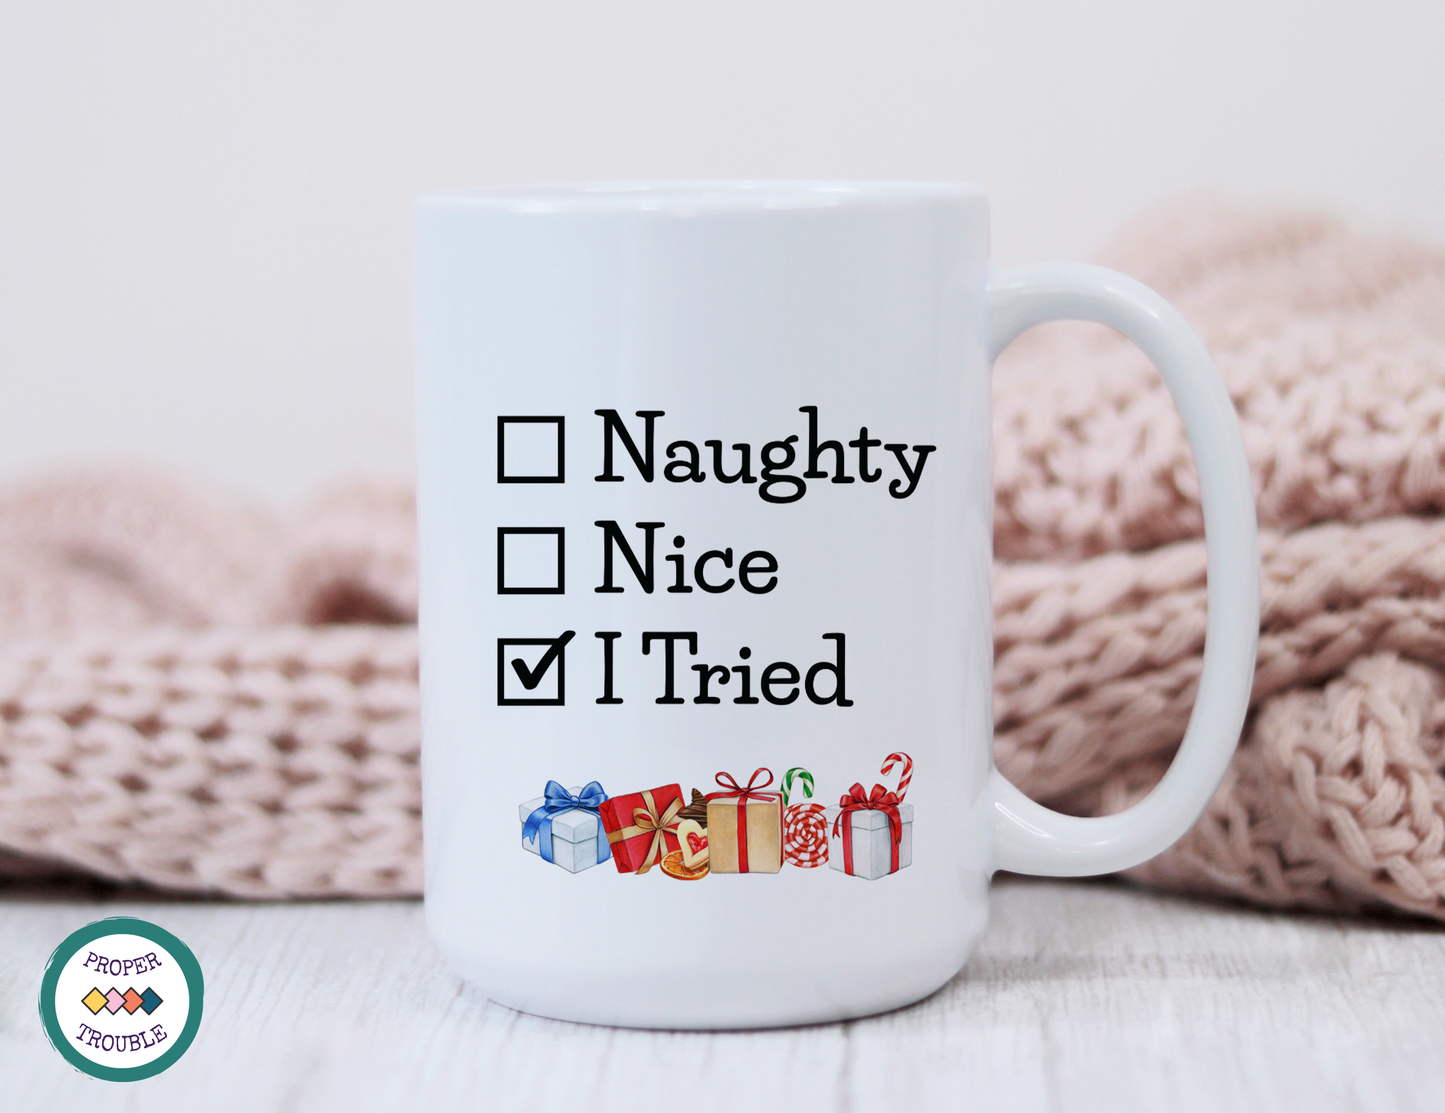 Dear Santa define Good / Naughty?, Nice? I Tried ✅ Coffee / Tea Mug